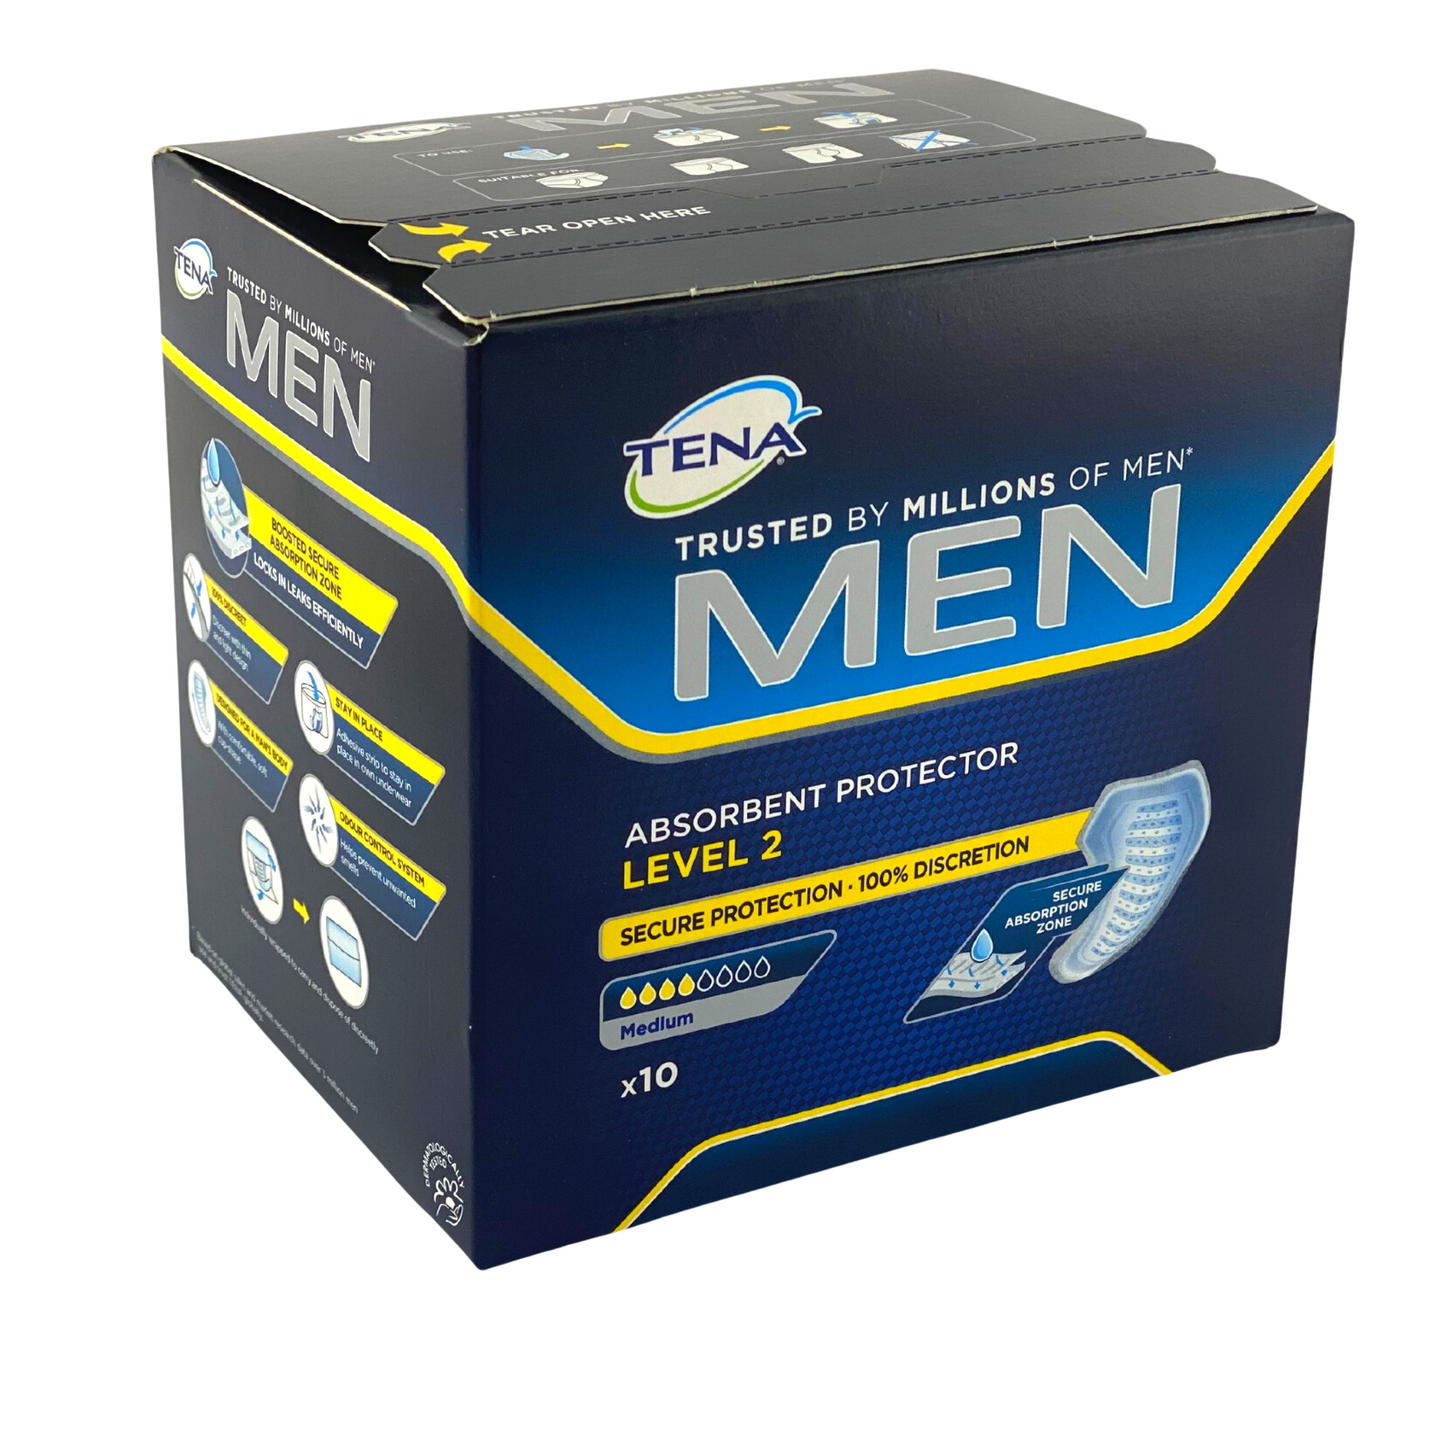 Tena For Men - Absorbent Protector